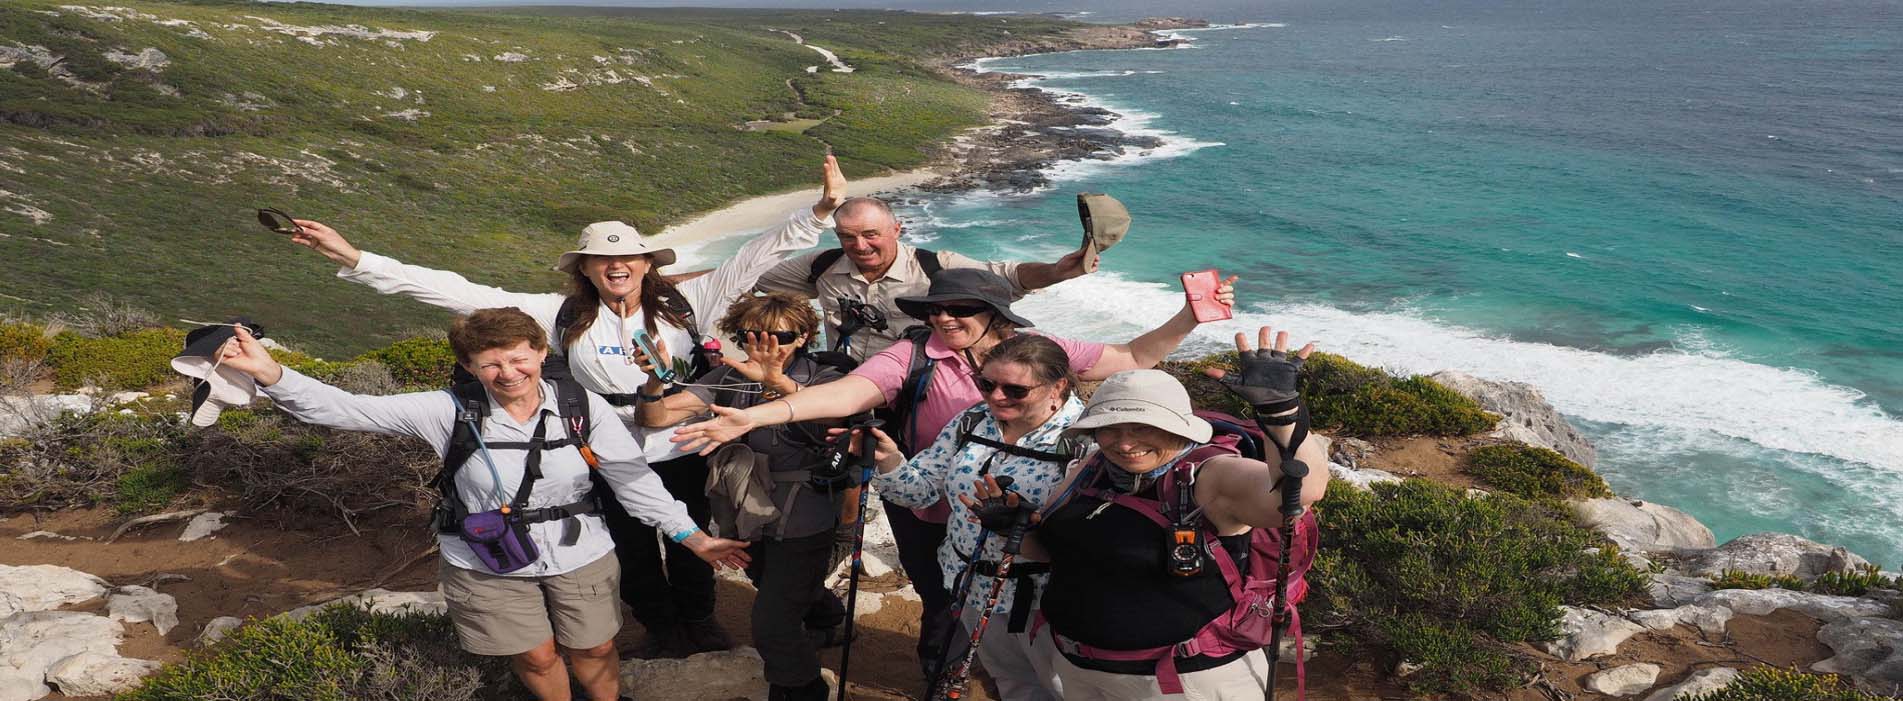 9 DAY WEST AUSTRALIA adventure walking tour